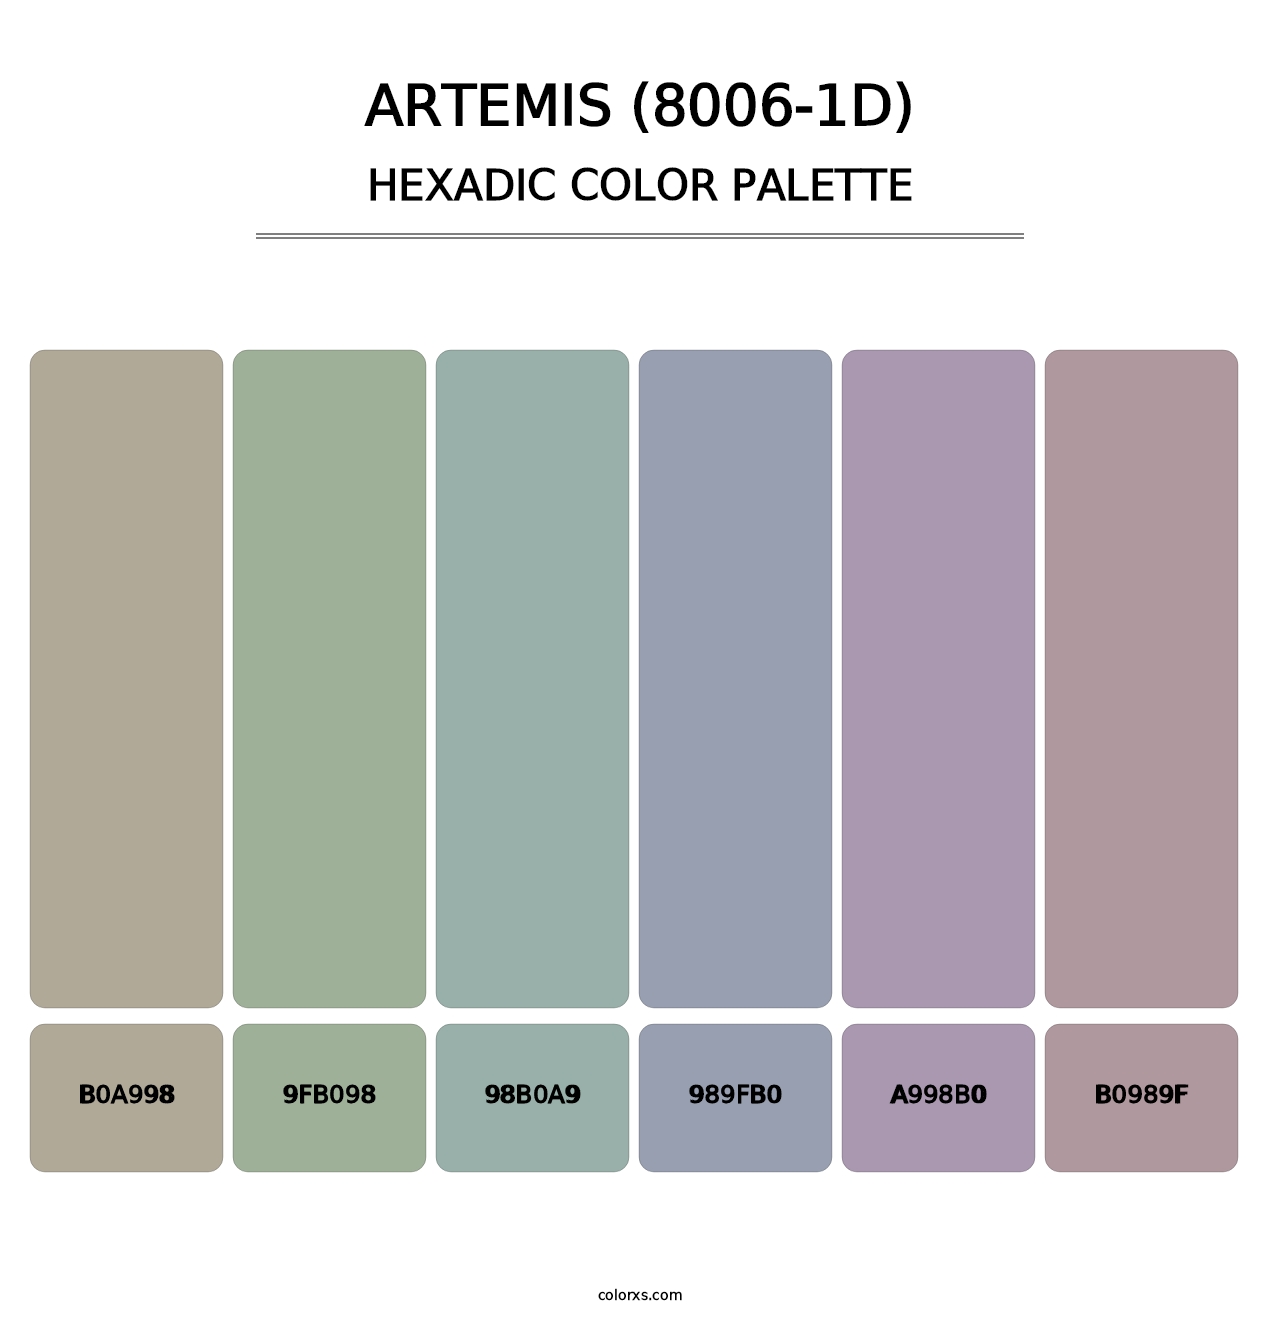 Artemis (8006-1D) - Hexadic Color Palette